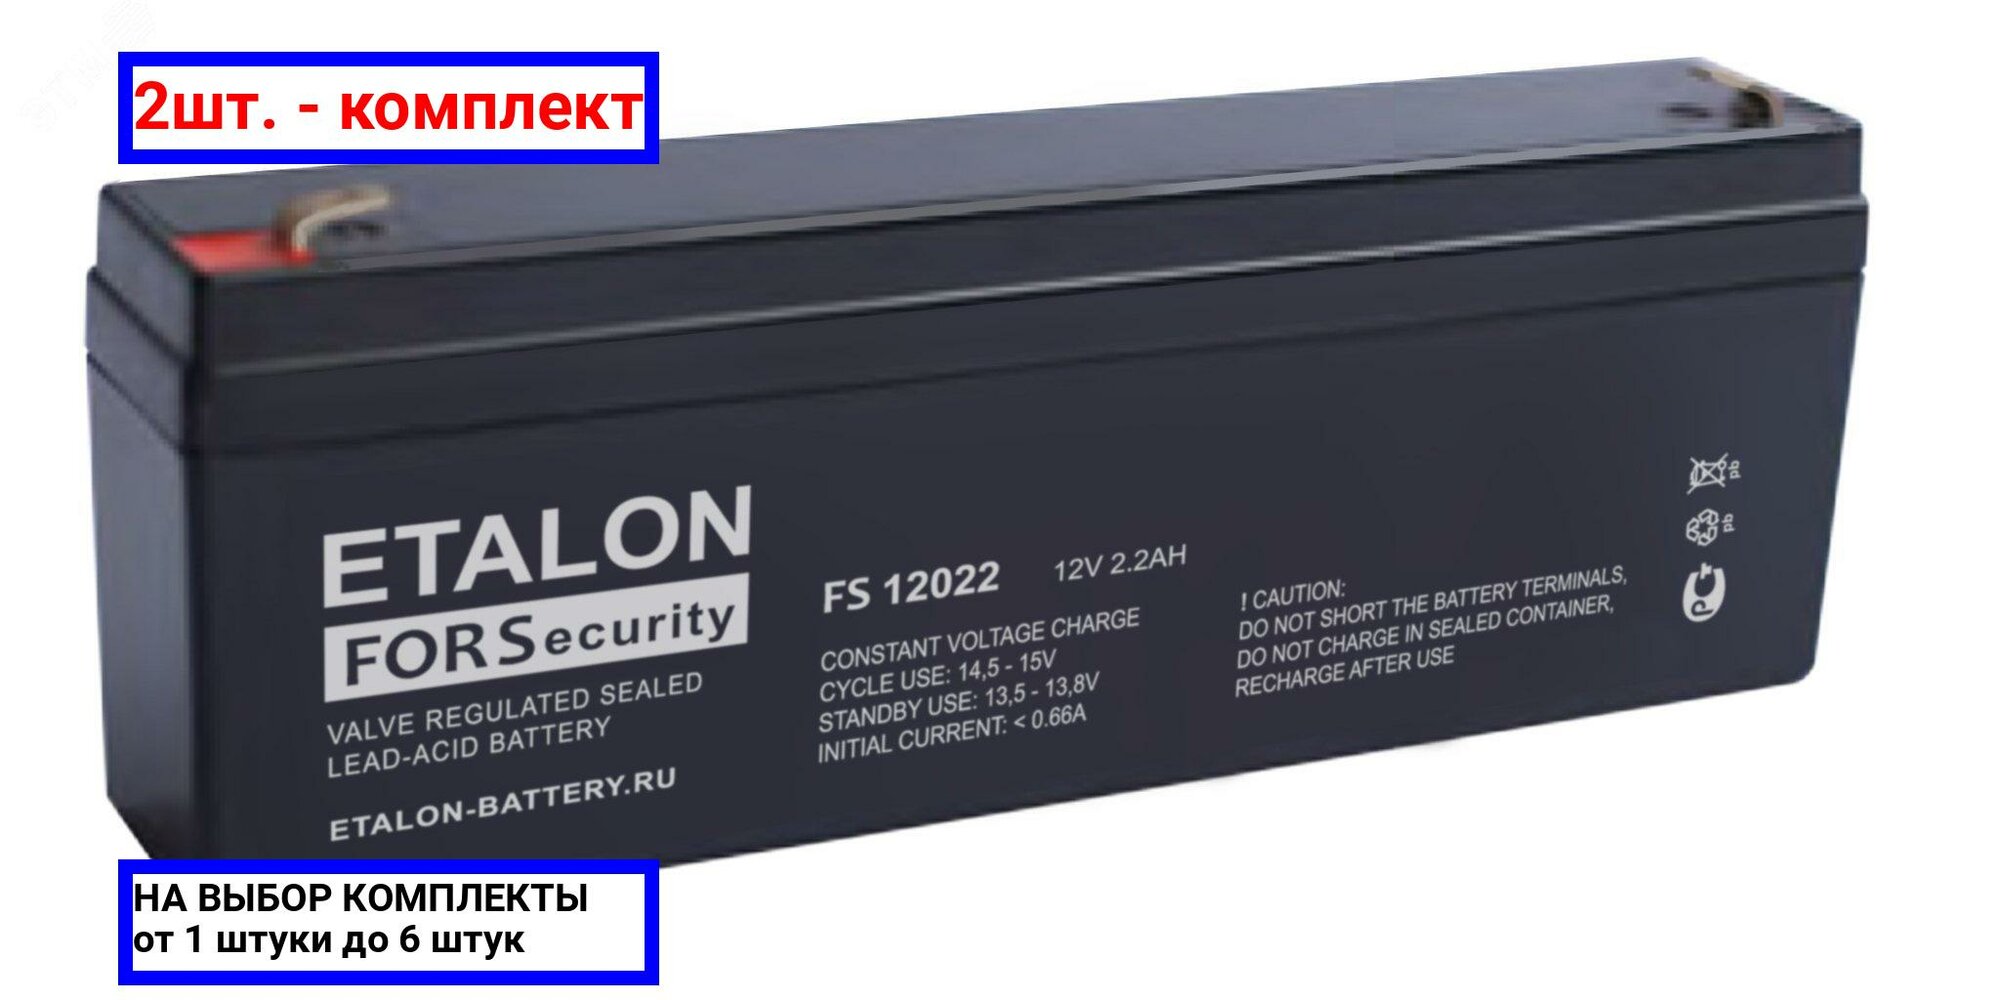 2шт. - Аккумулятор FS 12В 2,2Ач / Etalon battery; арт. FS 12022; оригинал / - комплект 2шт